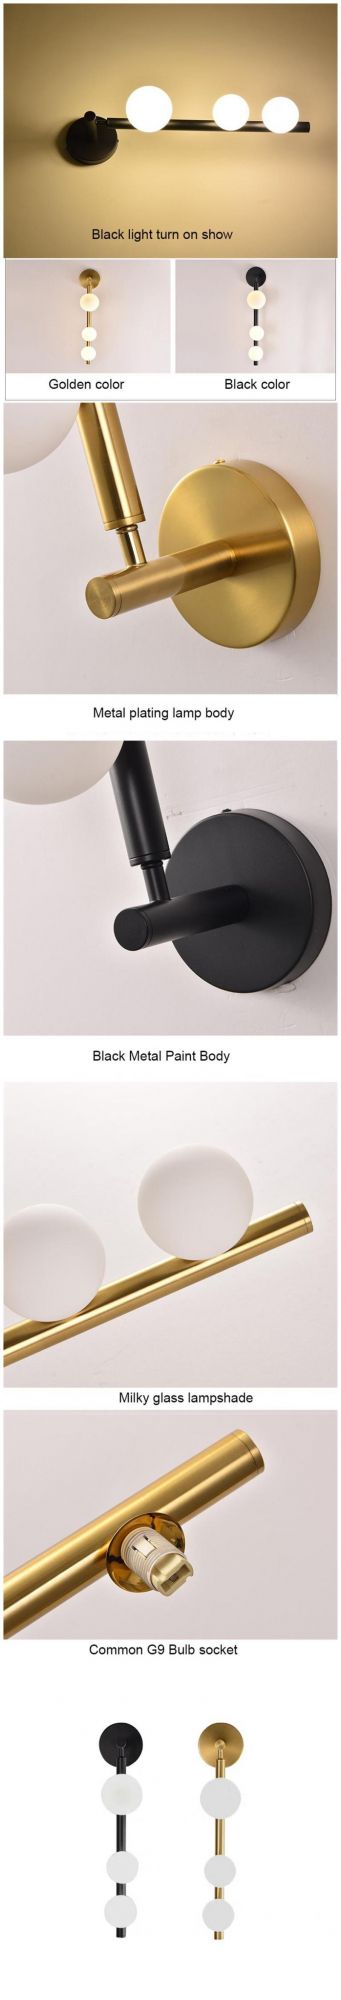 Artpad Lighting-Decorative Wall-Sconces-Light for Corridor Bathroom TV Background Golden Black Metal Wall Mirror Vanity Light G9